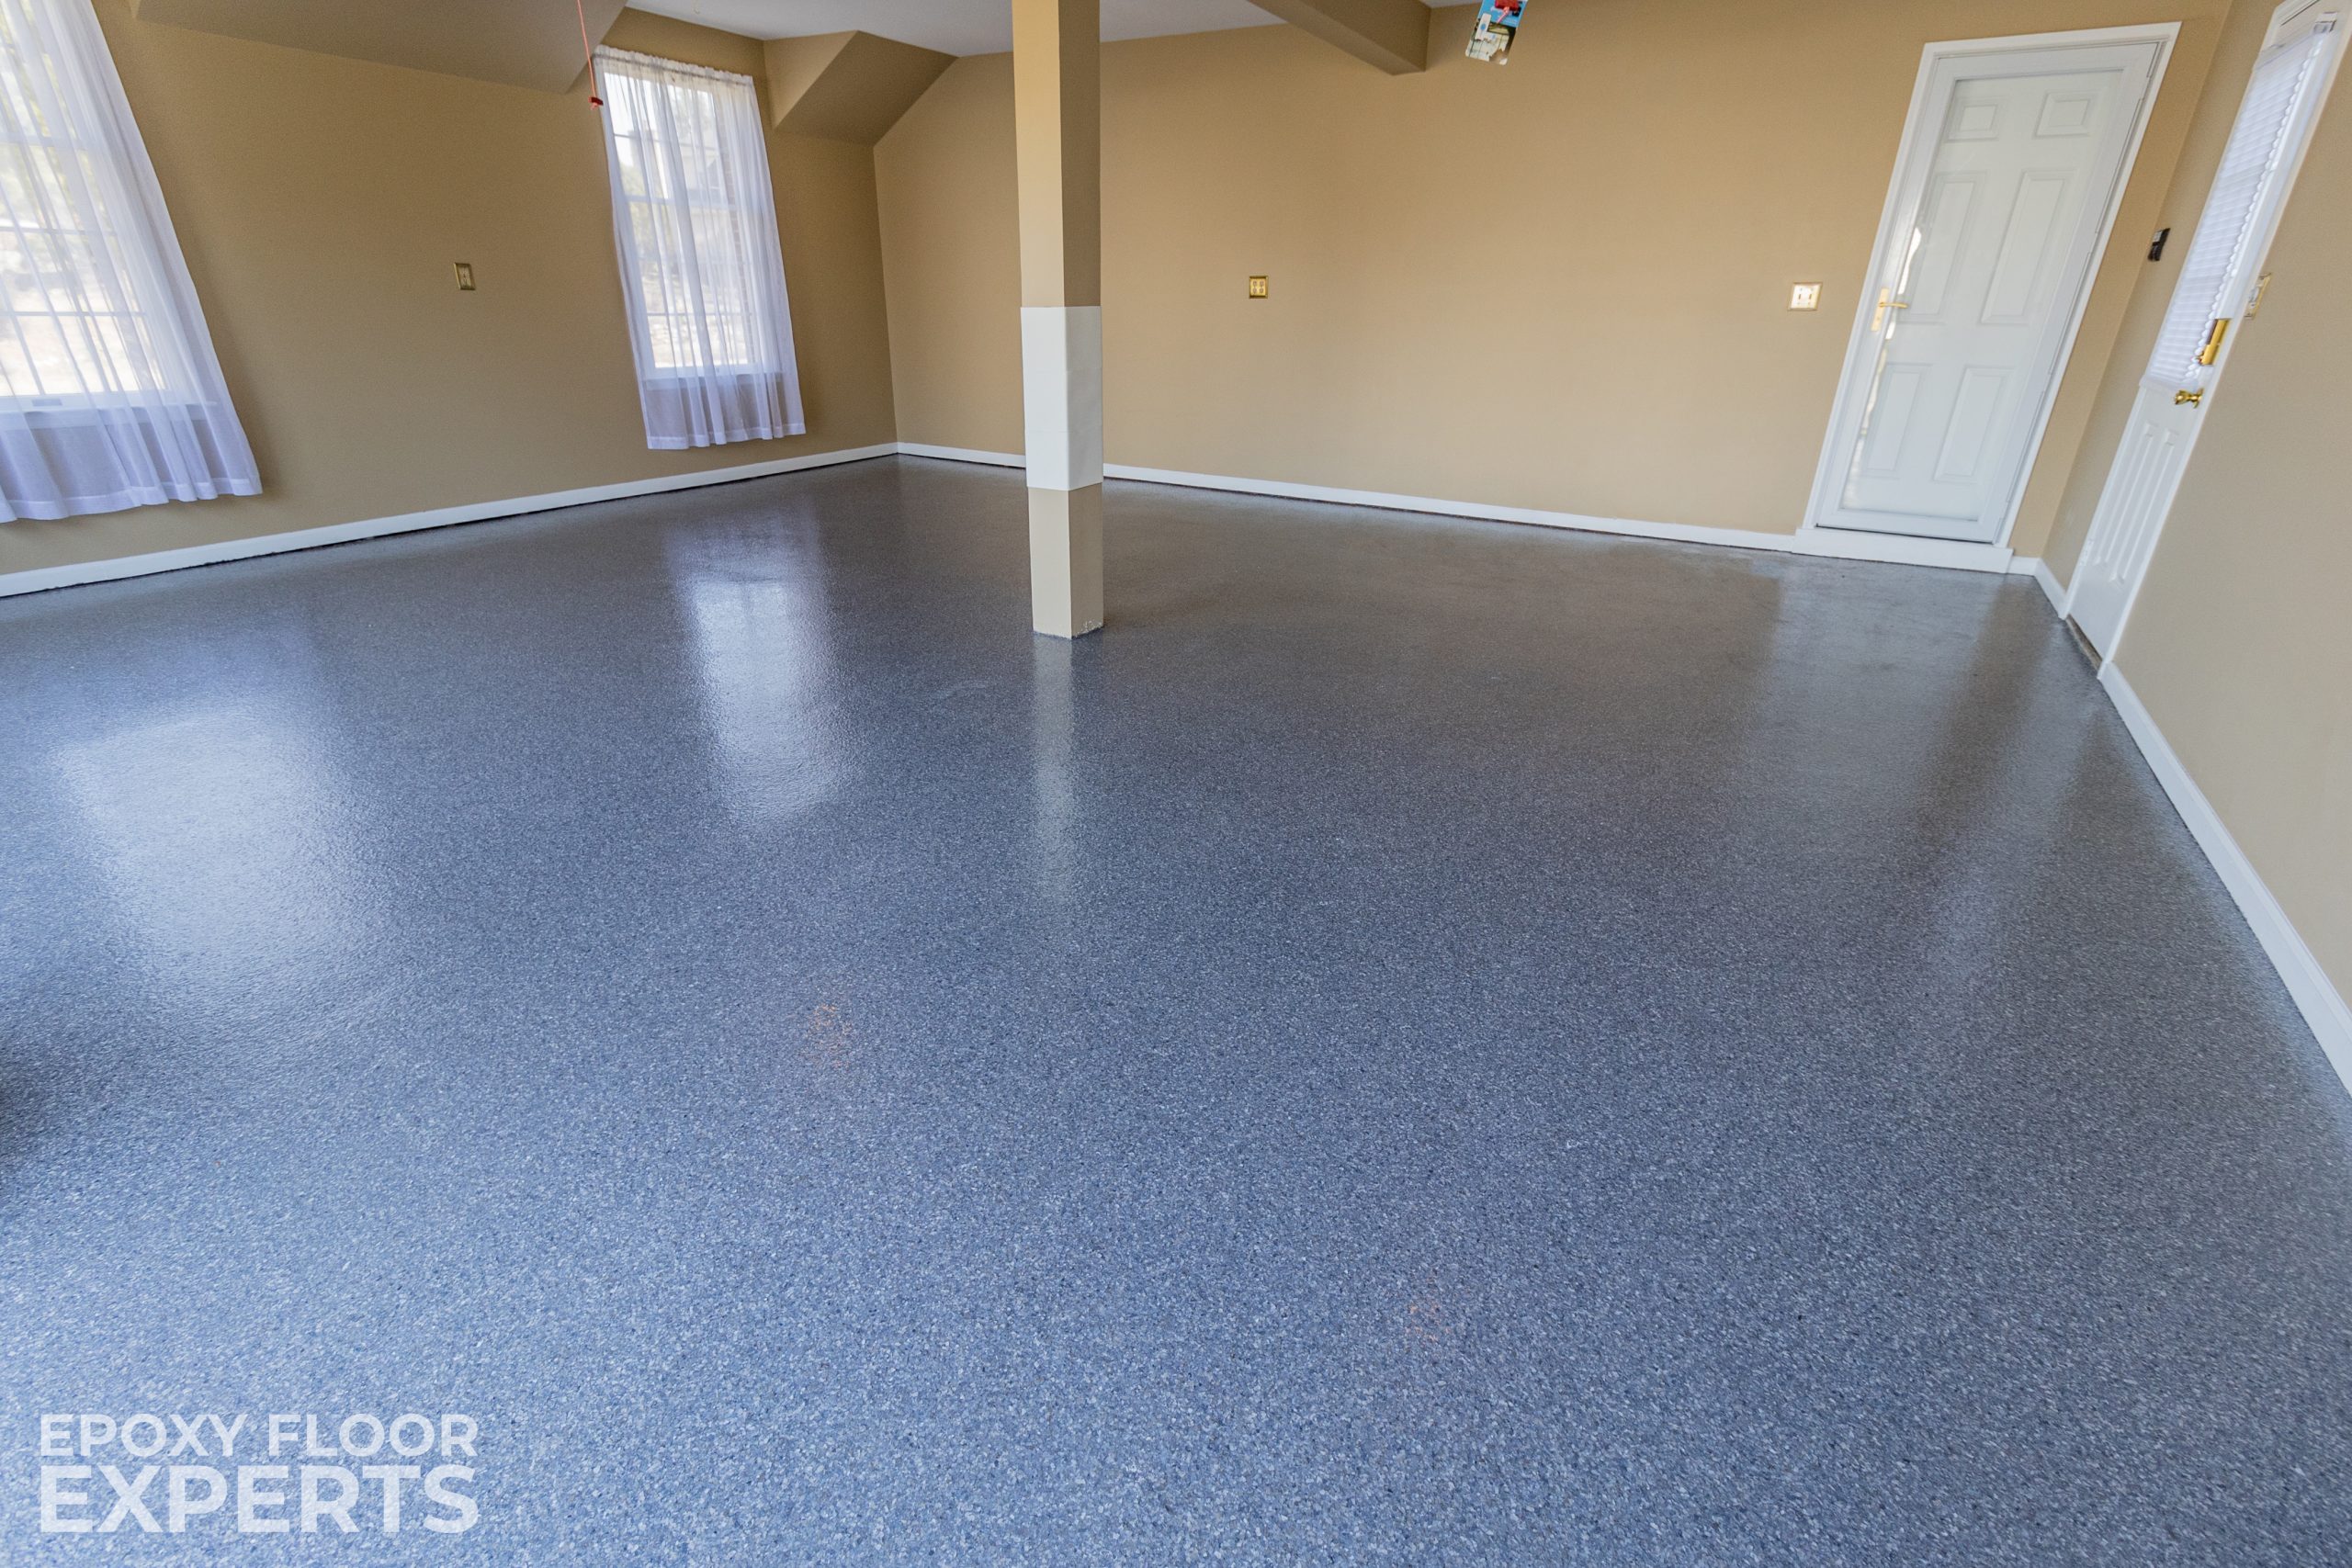 Dolerite stone flake epoxy flooring in garage application